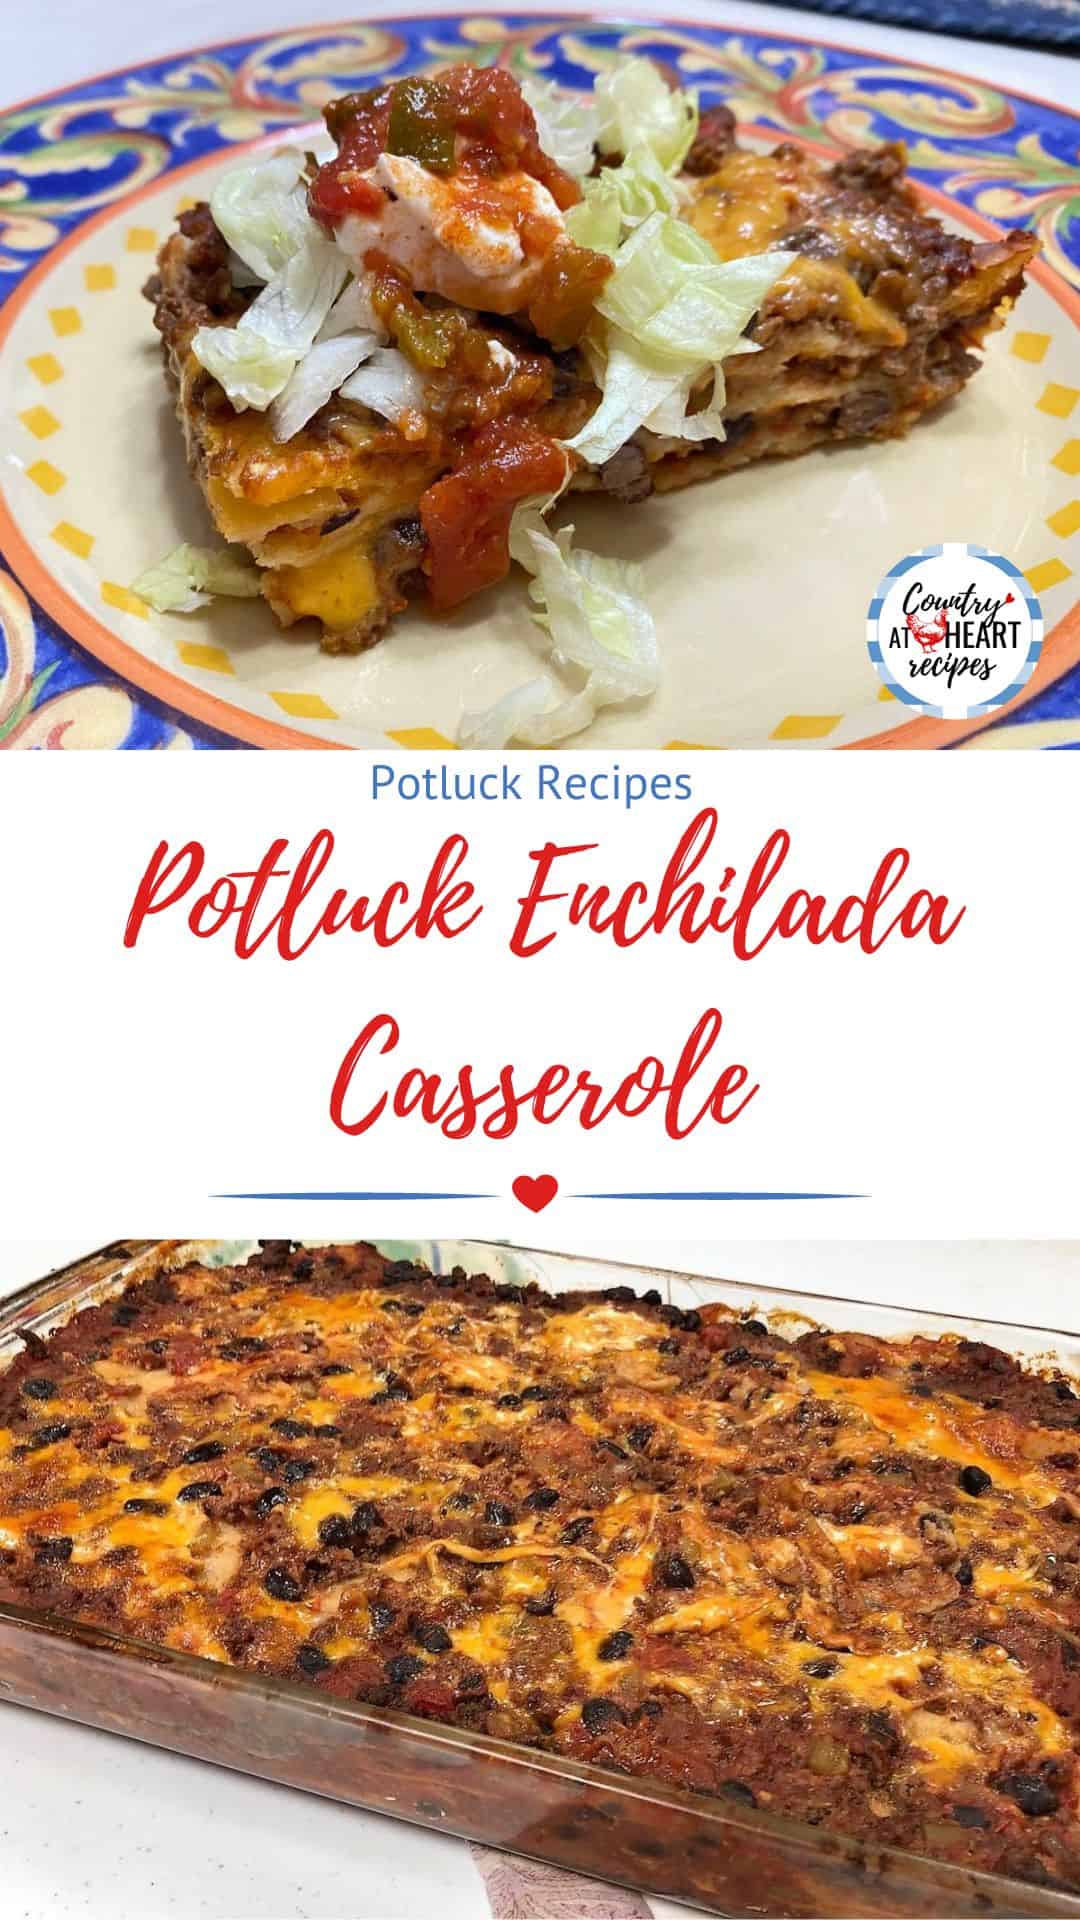 Pinterest Pin - Potluck Enchilada Casserole